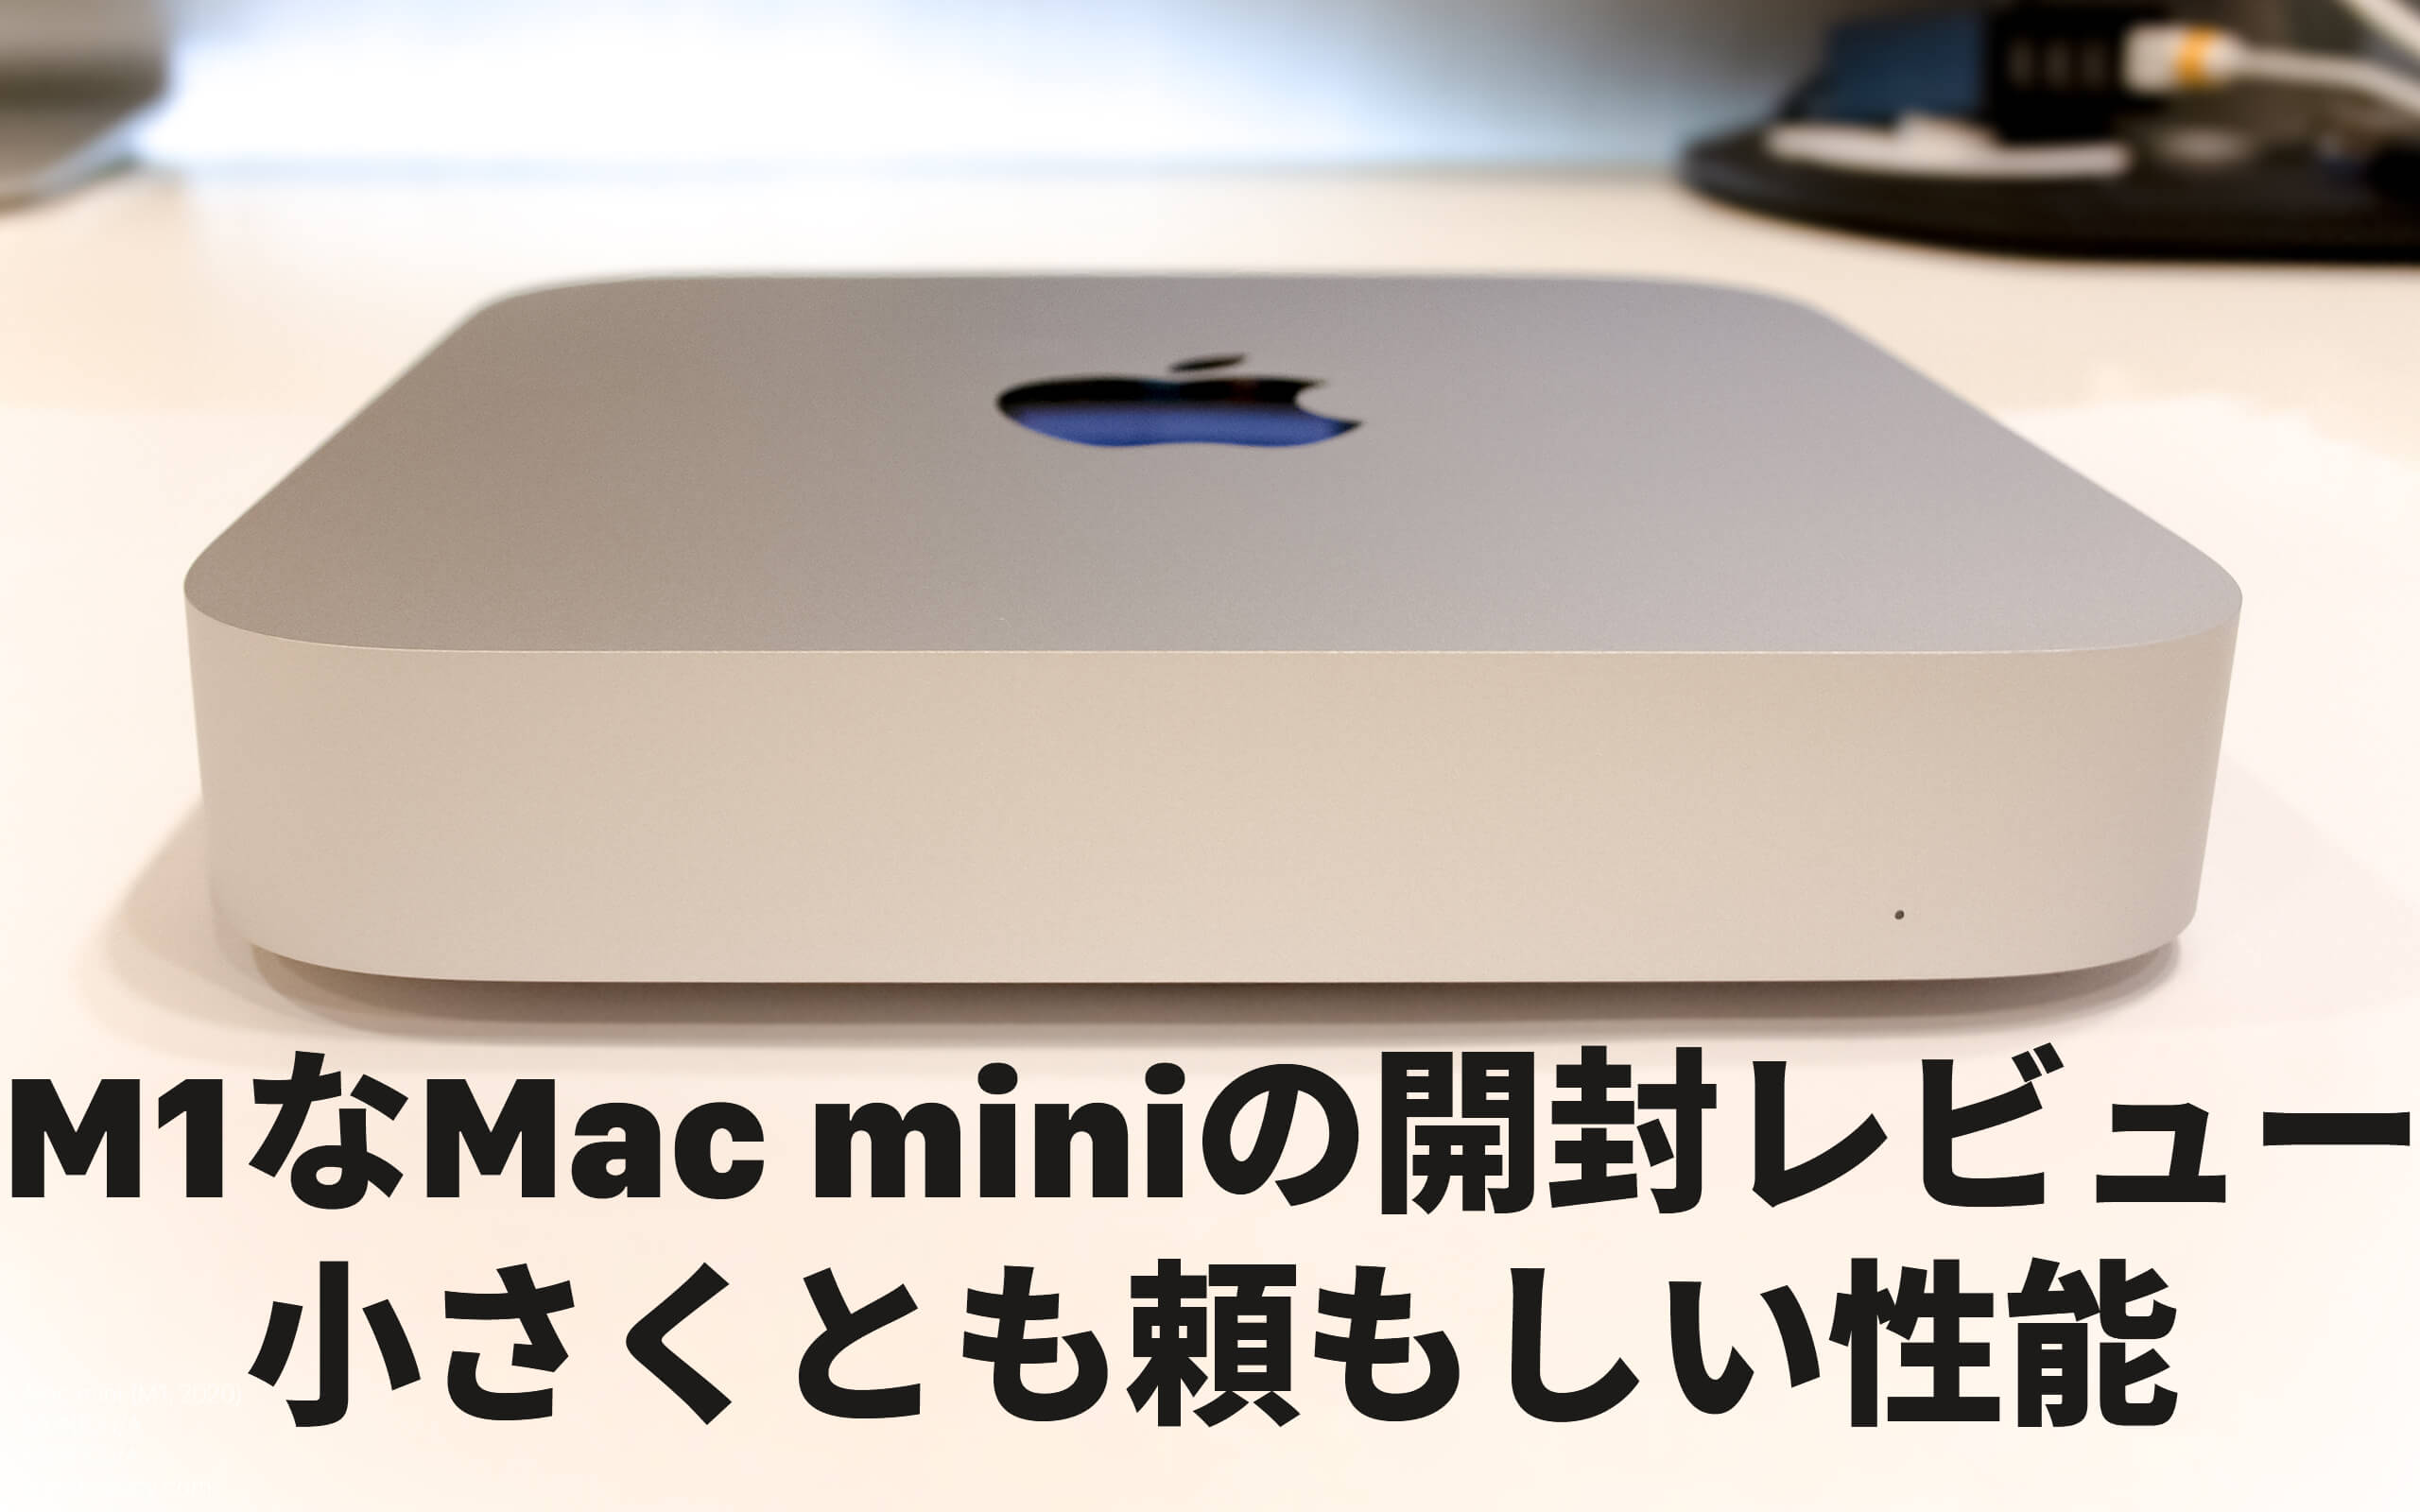 M1なMac miniレビュー、高性能で小型でも低価格なベストバイPC – あの 